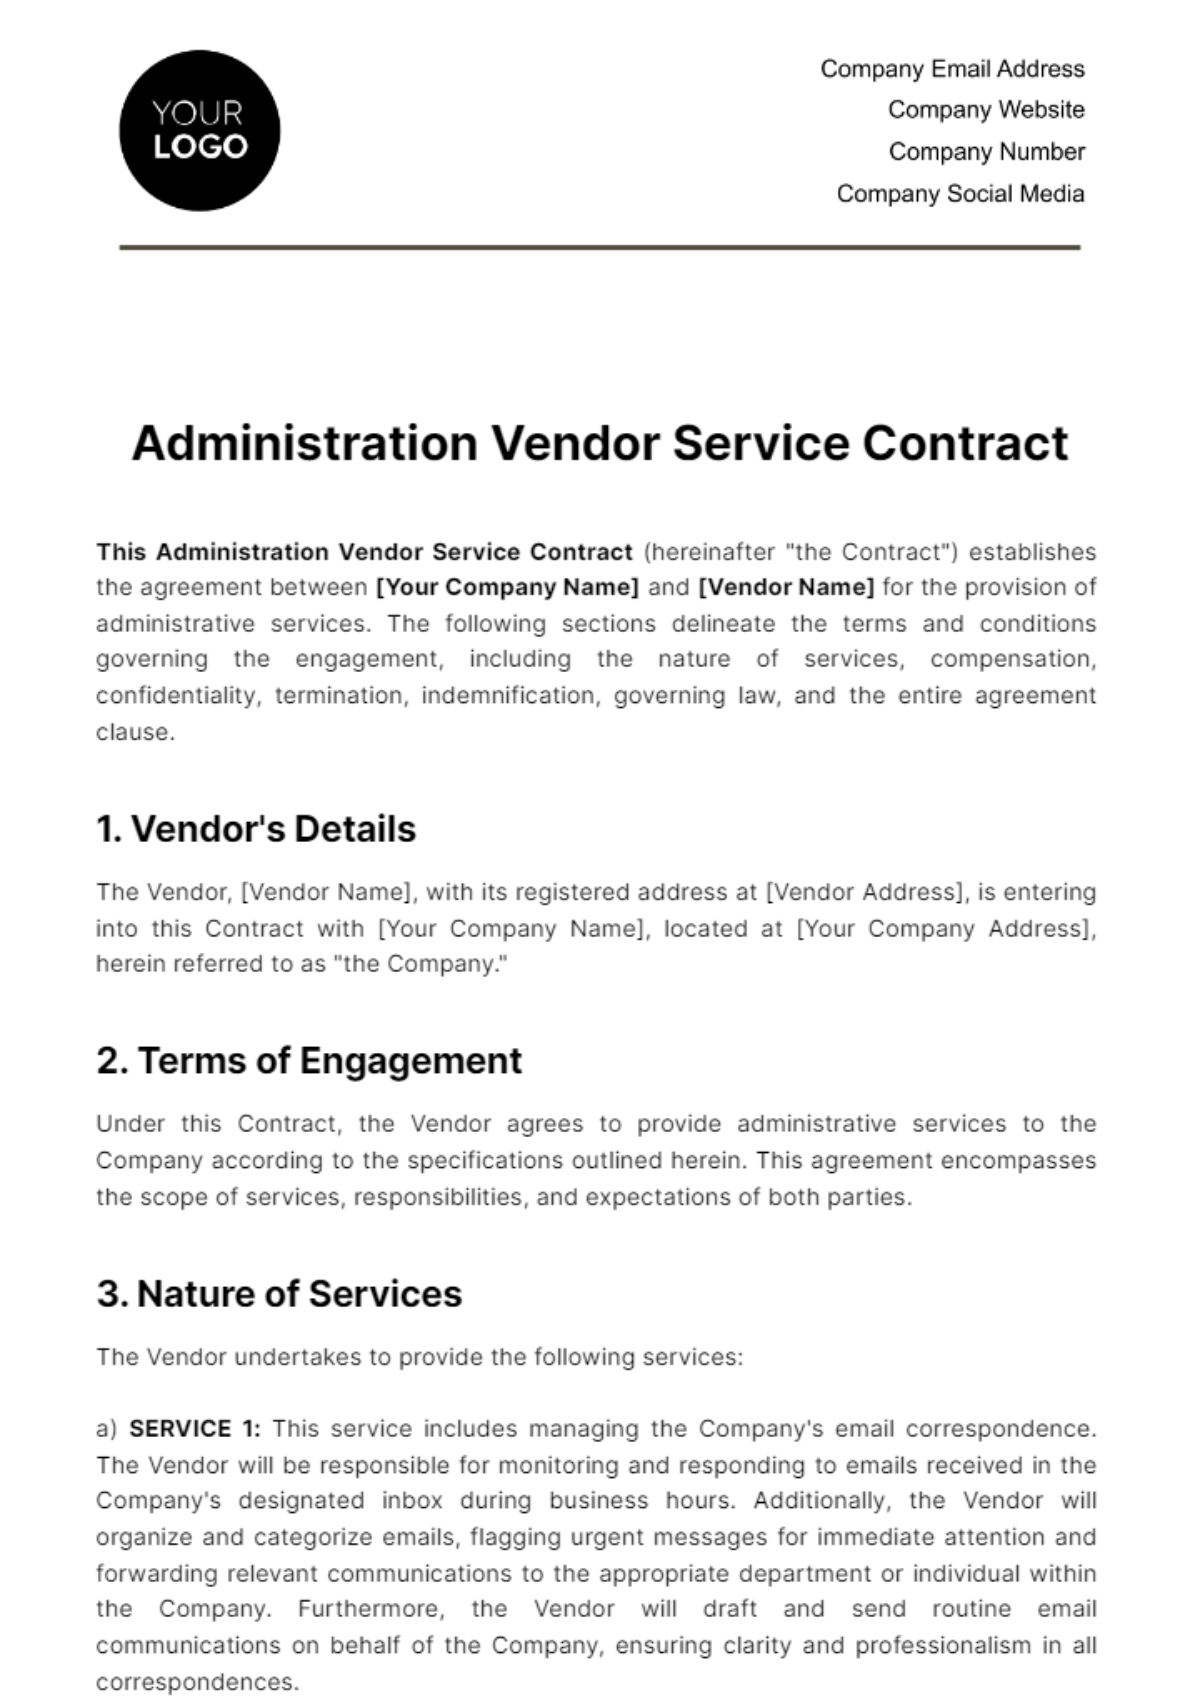 Administration Vendor Service Contract Template